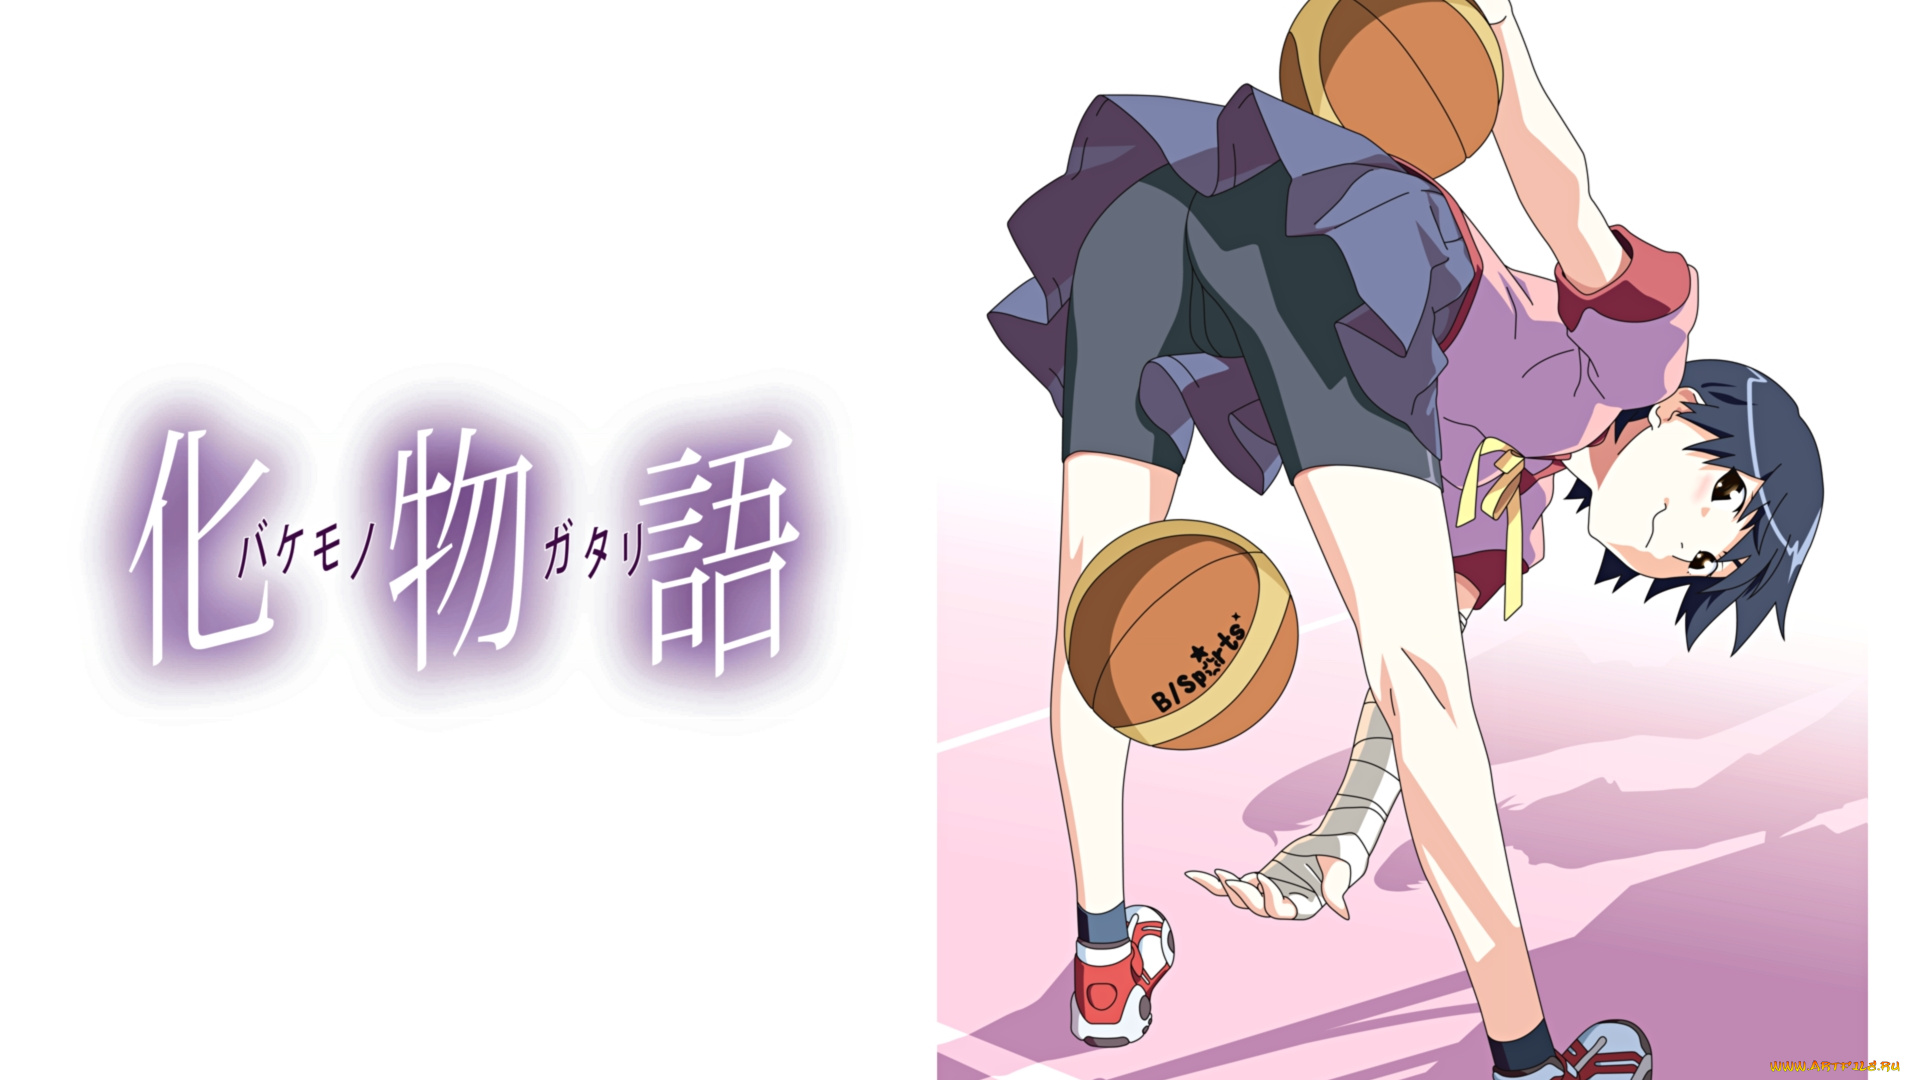 аниме, bakemonogatari, kanbaru, suruga, девушка, баскетбольный, мяч, форма, бинт, шорты